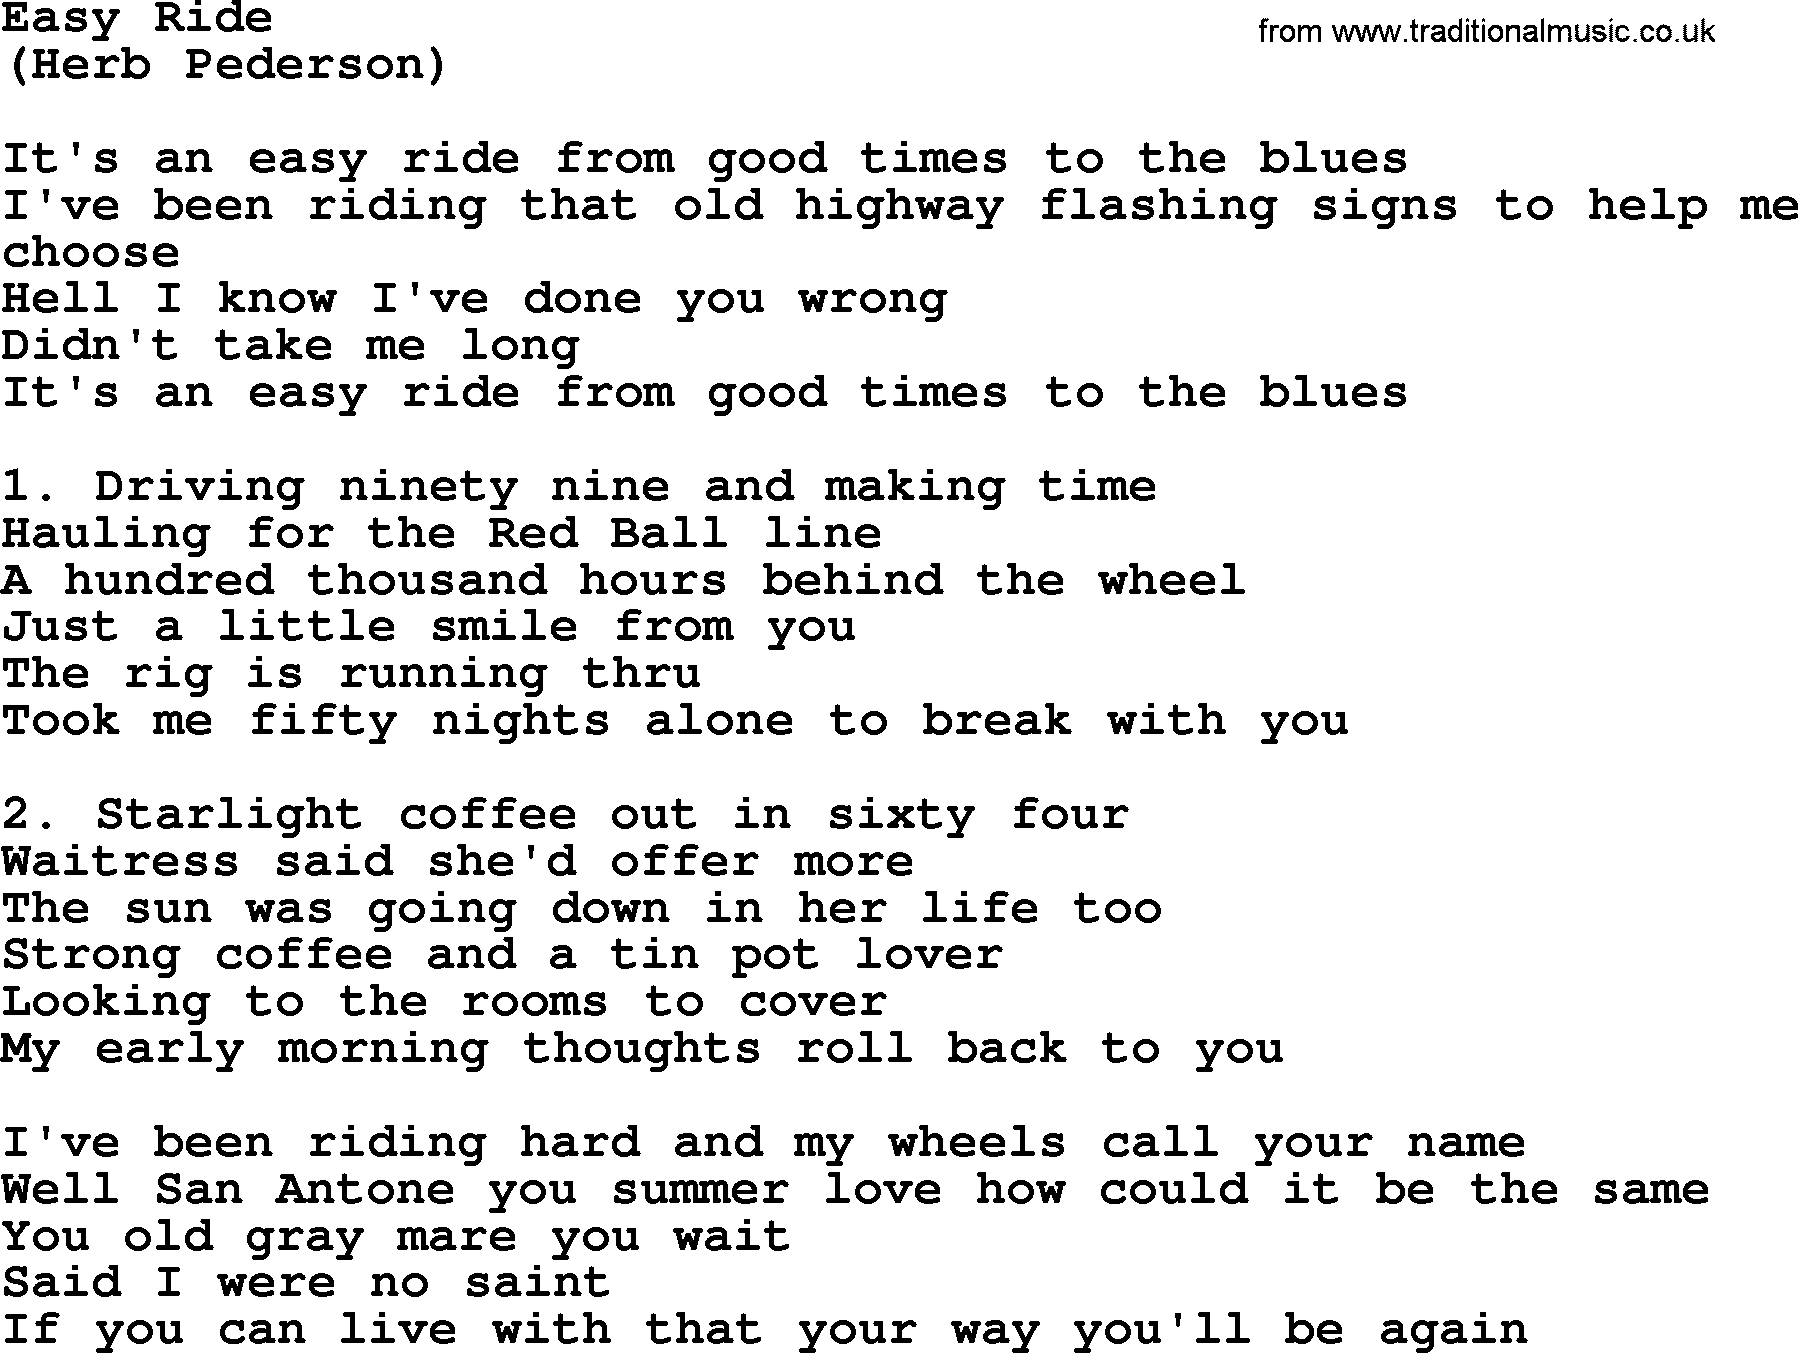 The Byrds song Easy Ride, lyrics